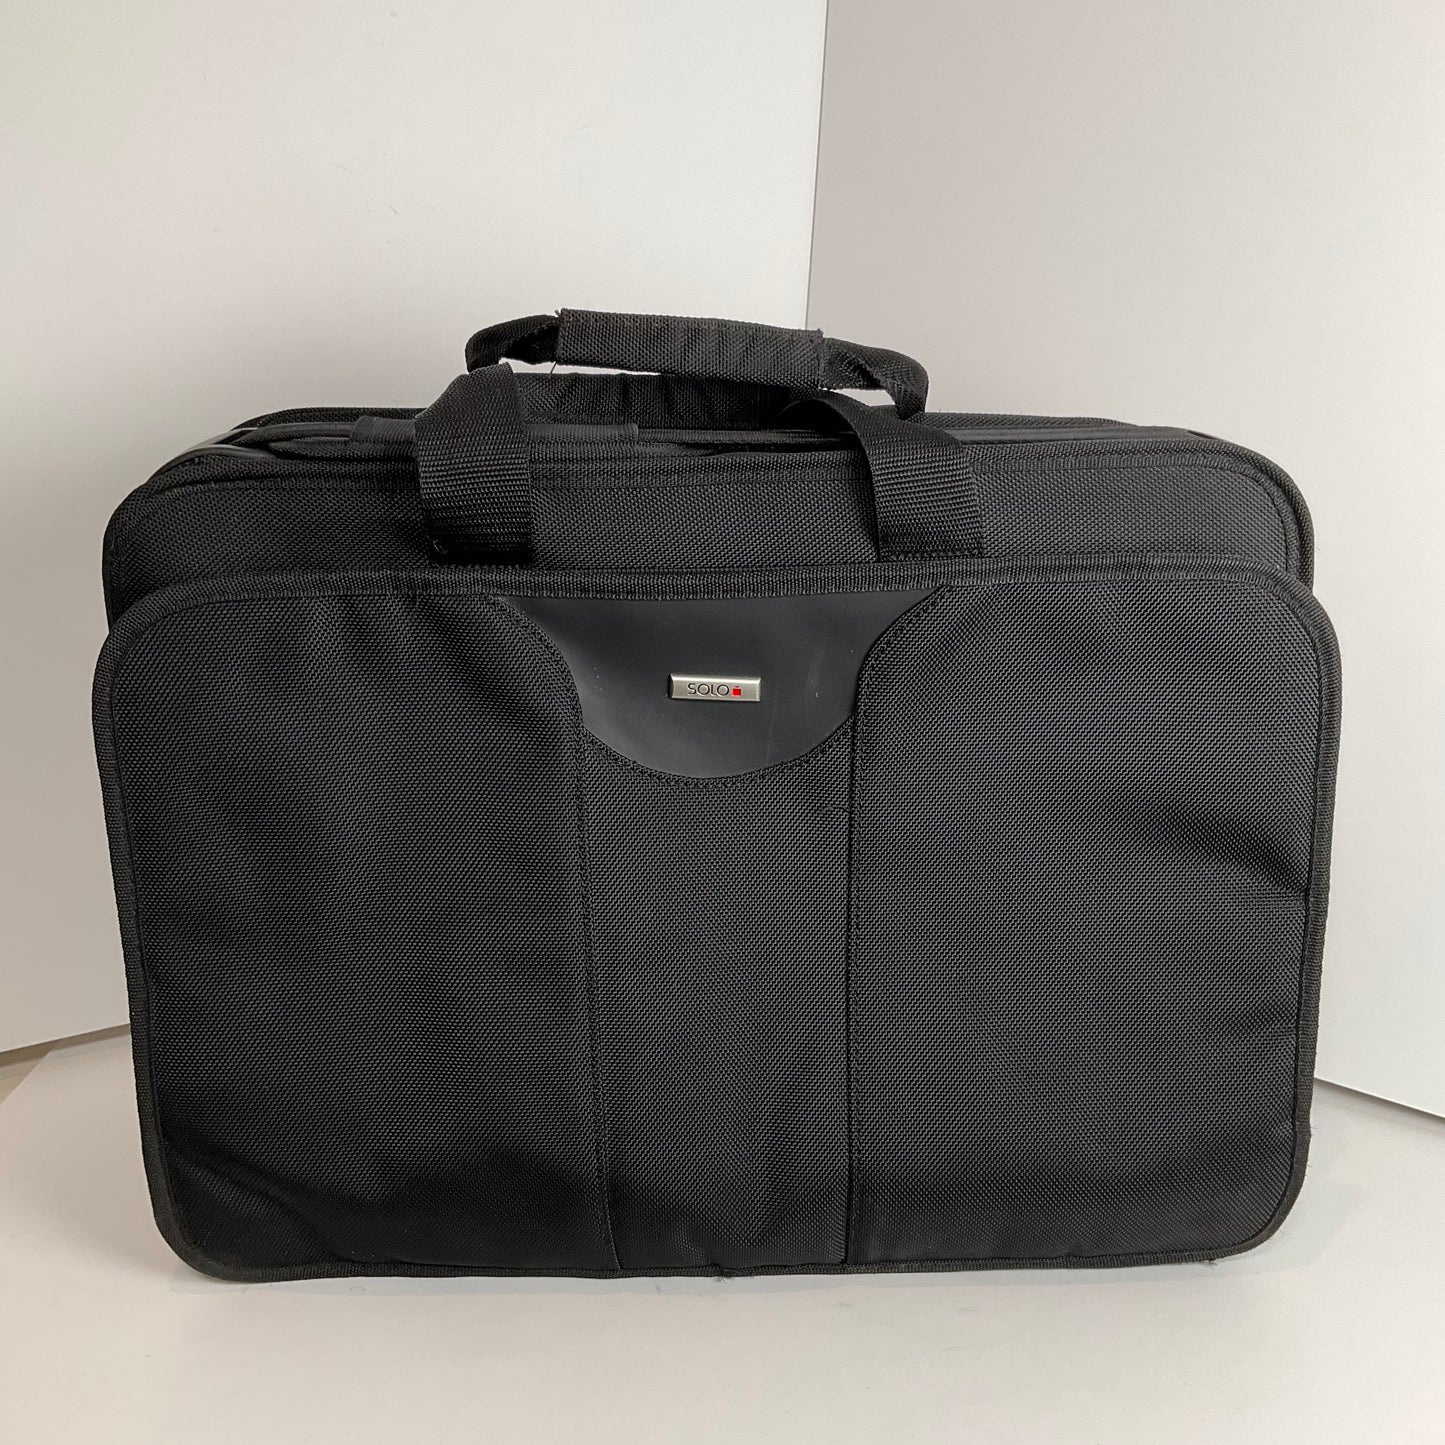 Solo - Travel Bag Briefcase